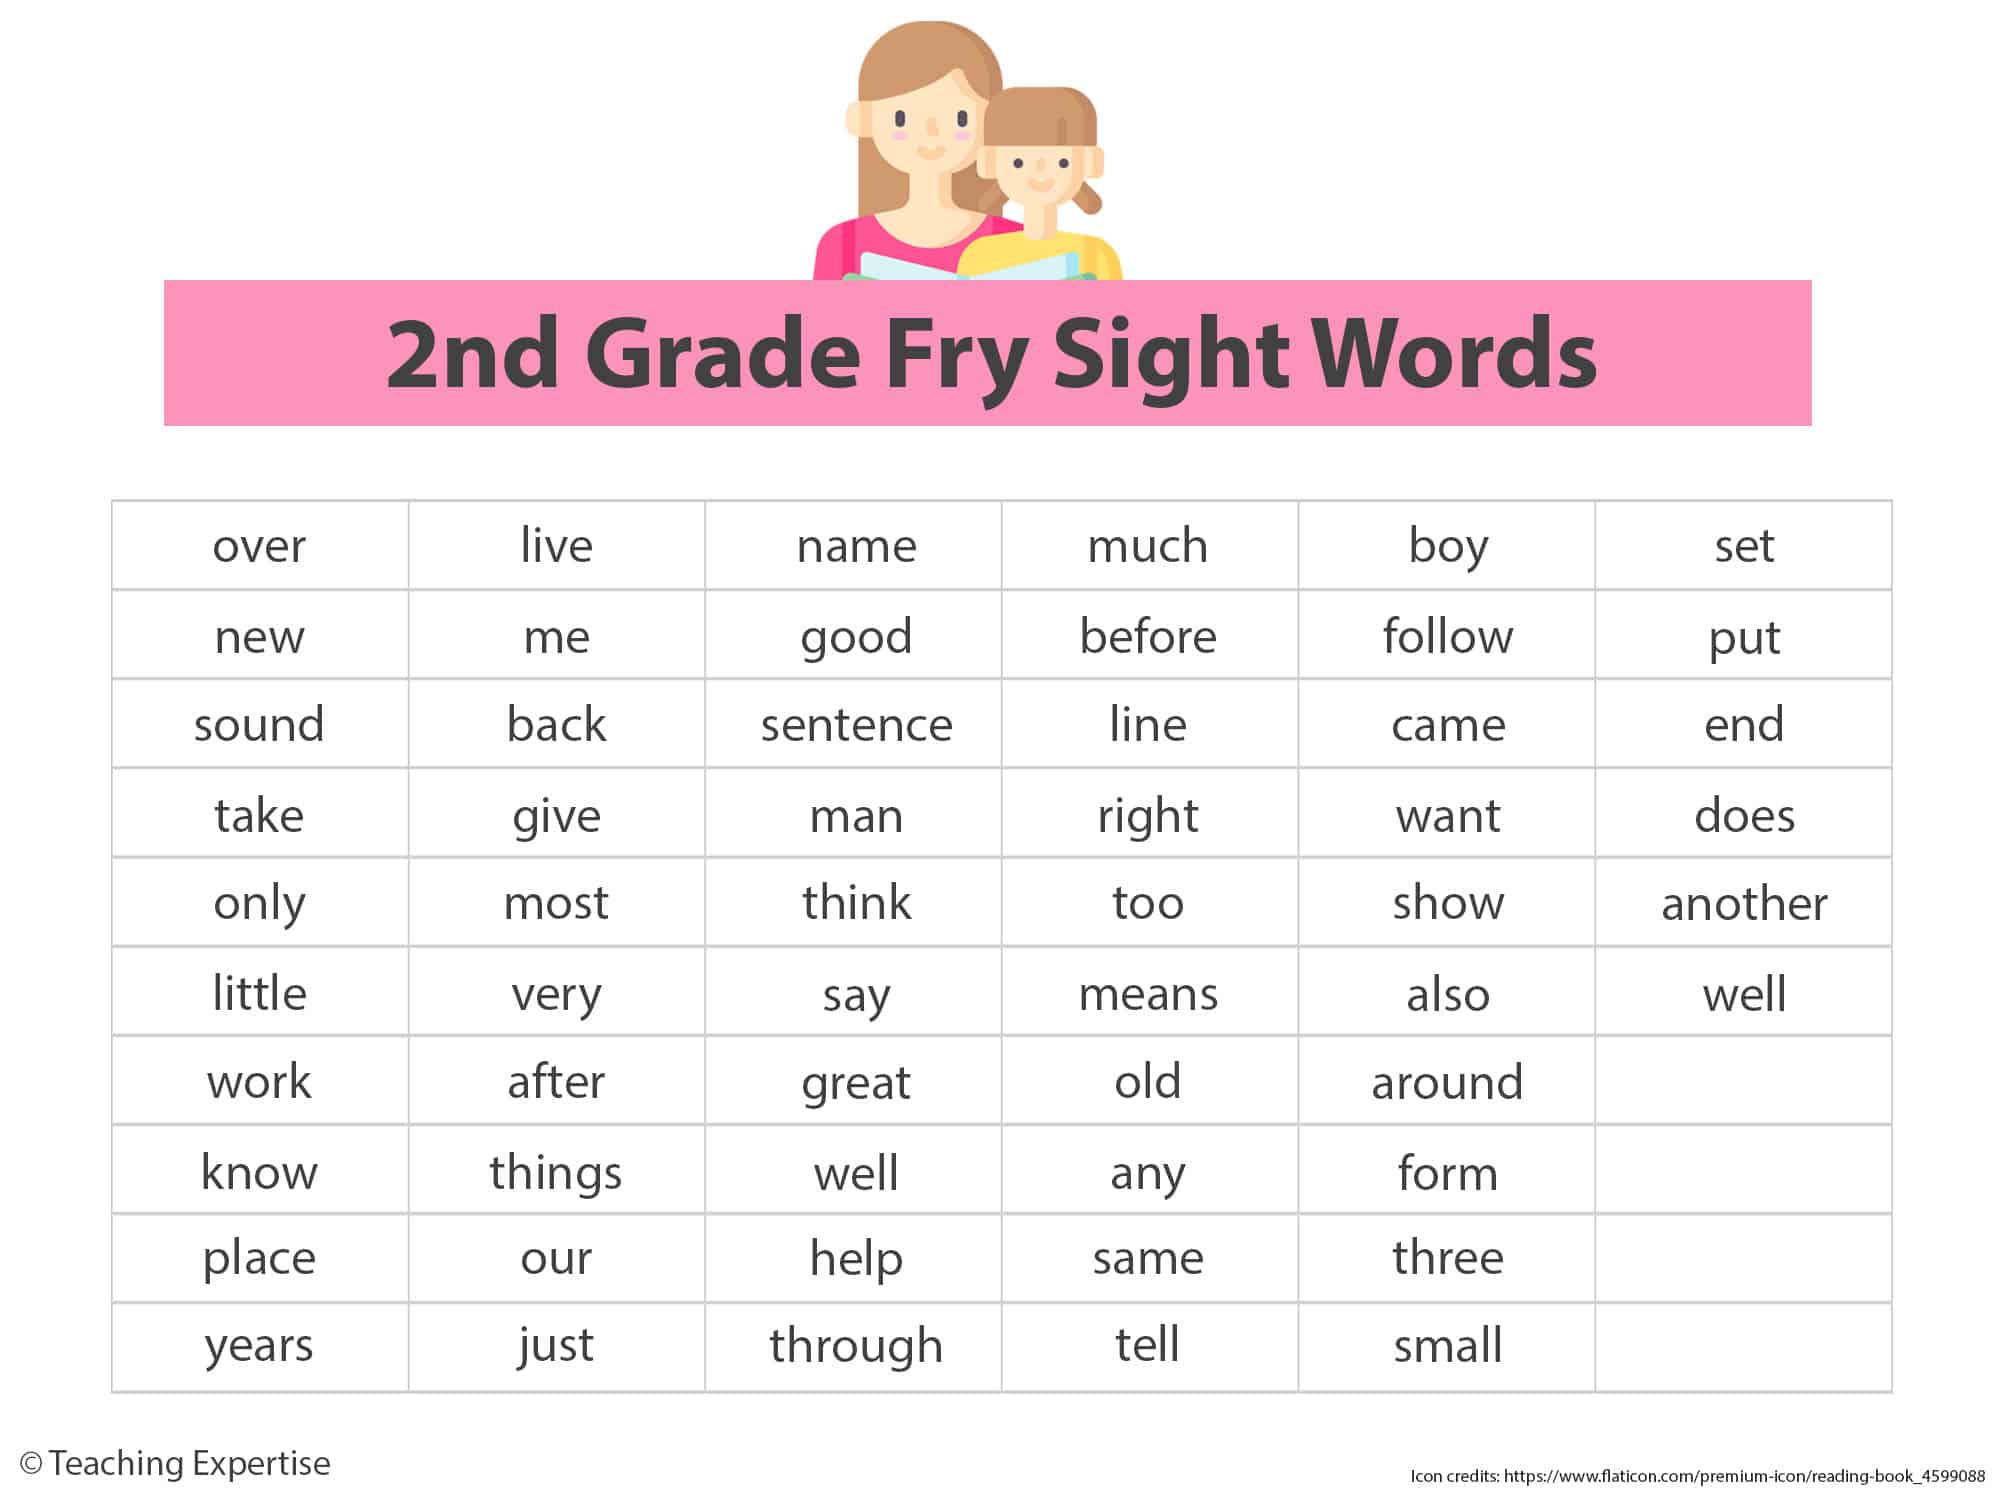 100-sight-words-for-fluent-2nd-grade-readers-teaching-expertise